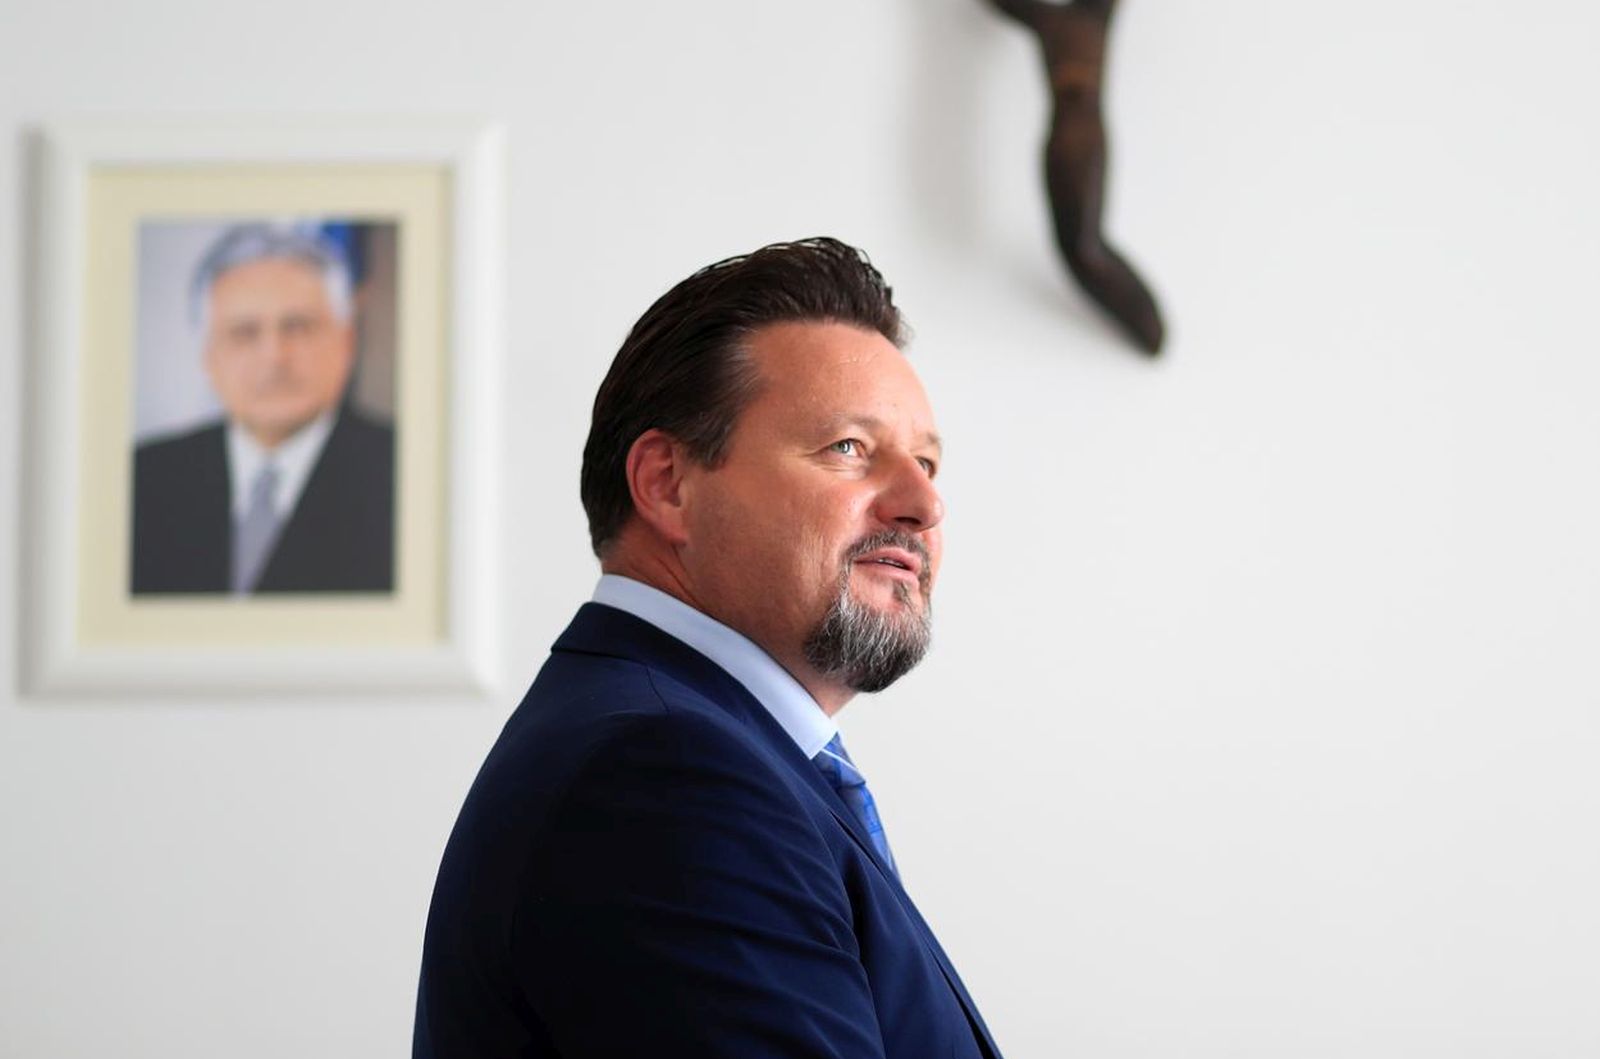 20.09.2018., Zagreb - Ministar Uprave Lovro Kuscevic."nPhoto: Slavko Midzor/PIXSELL